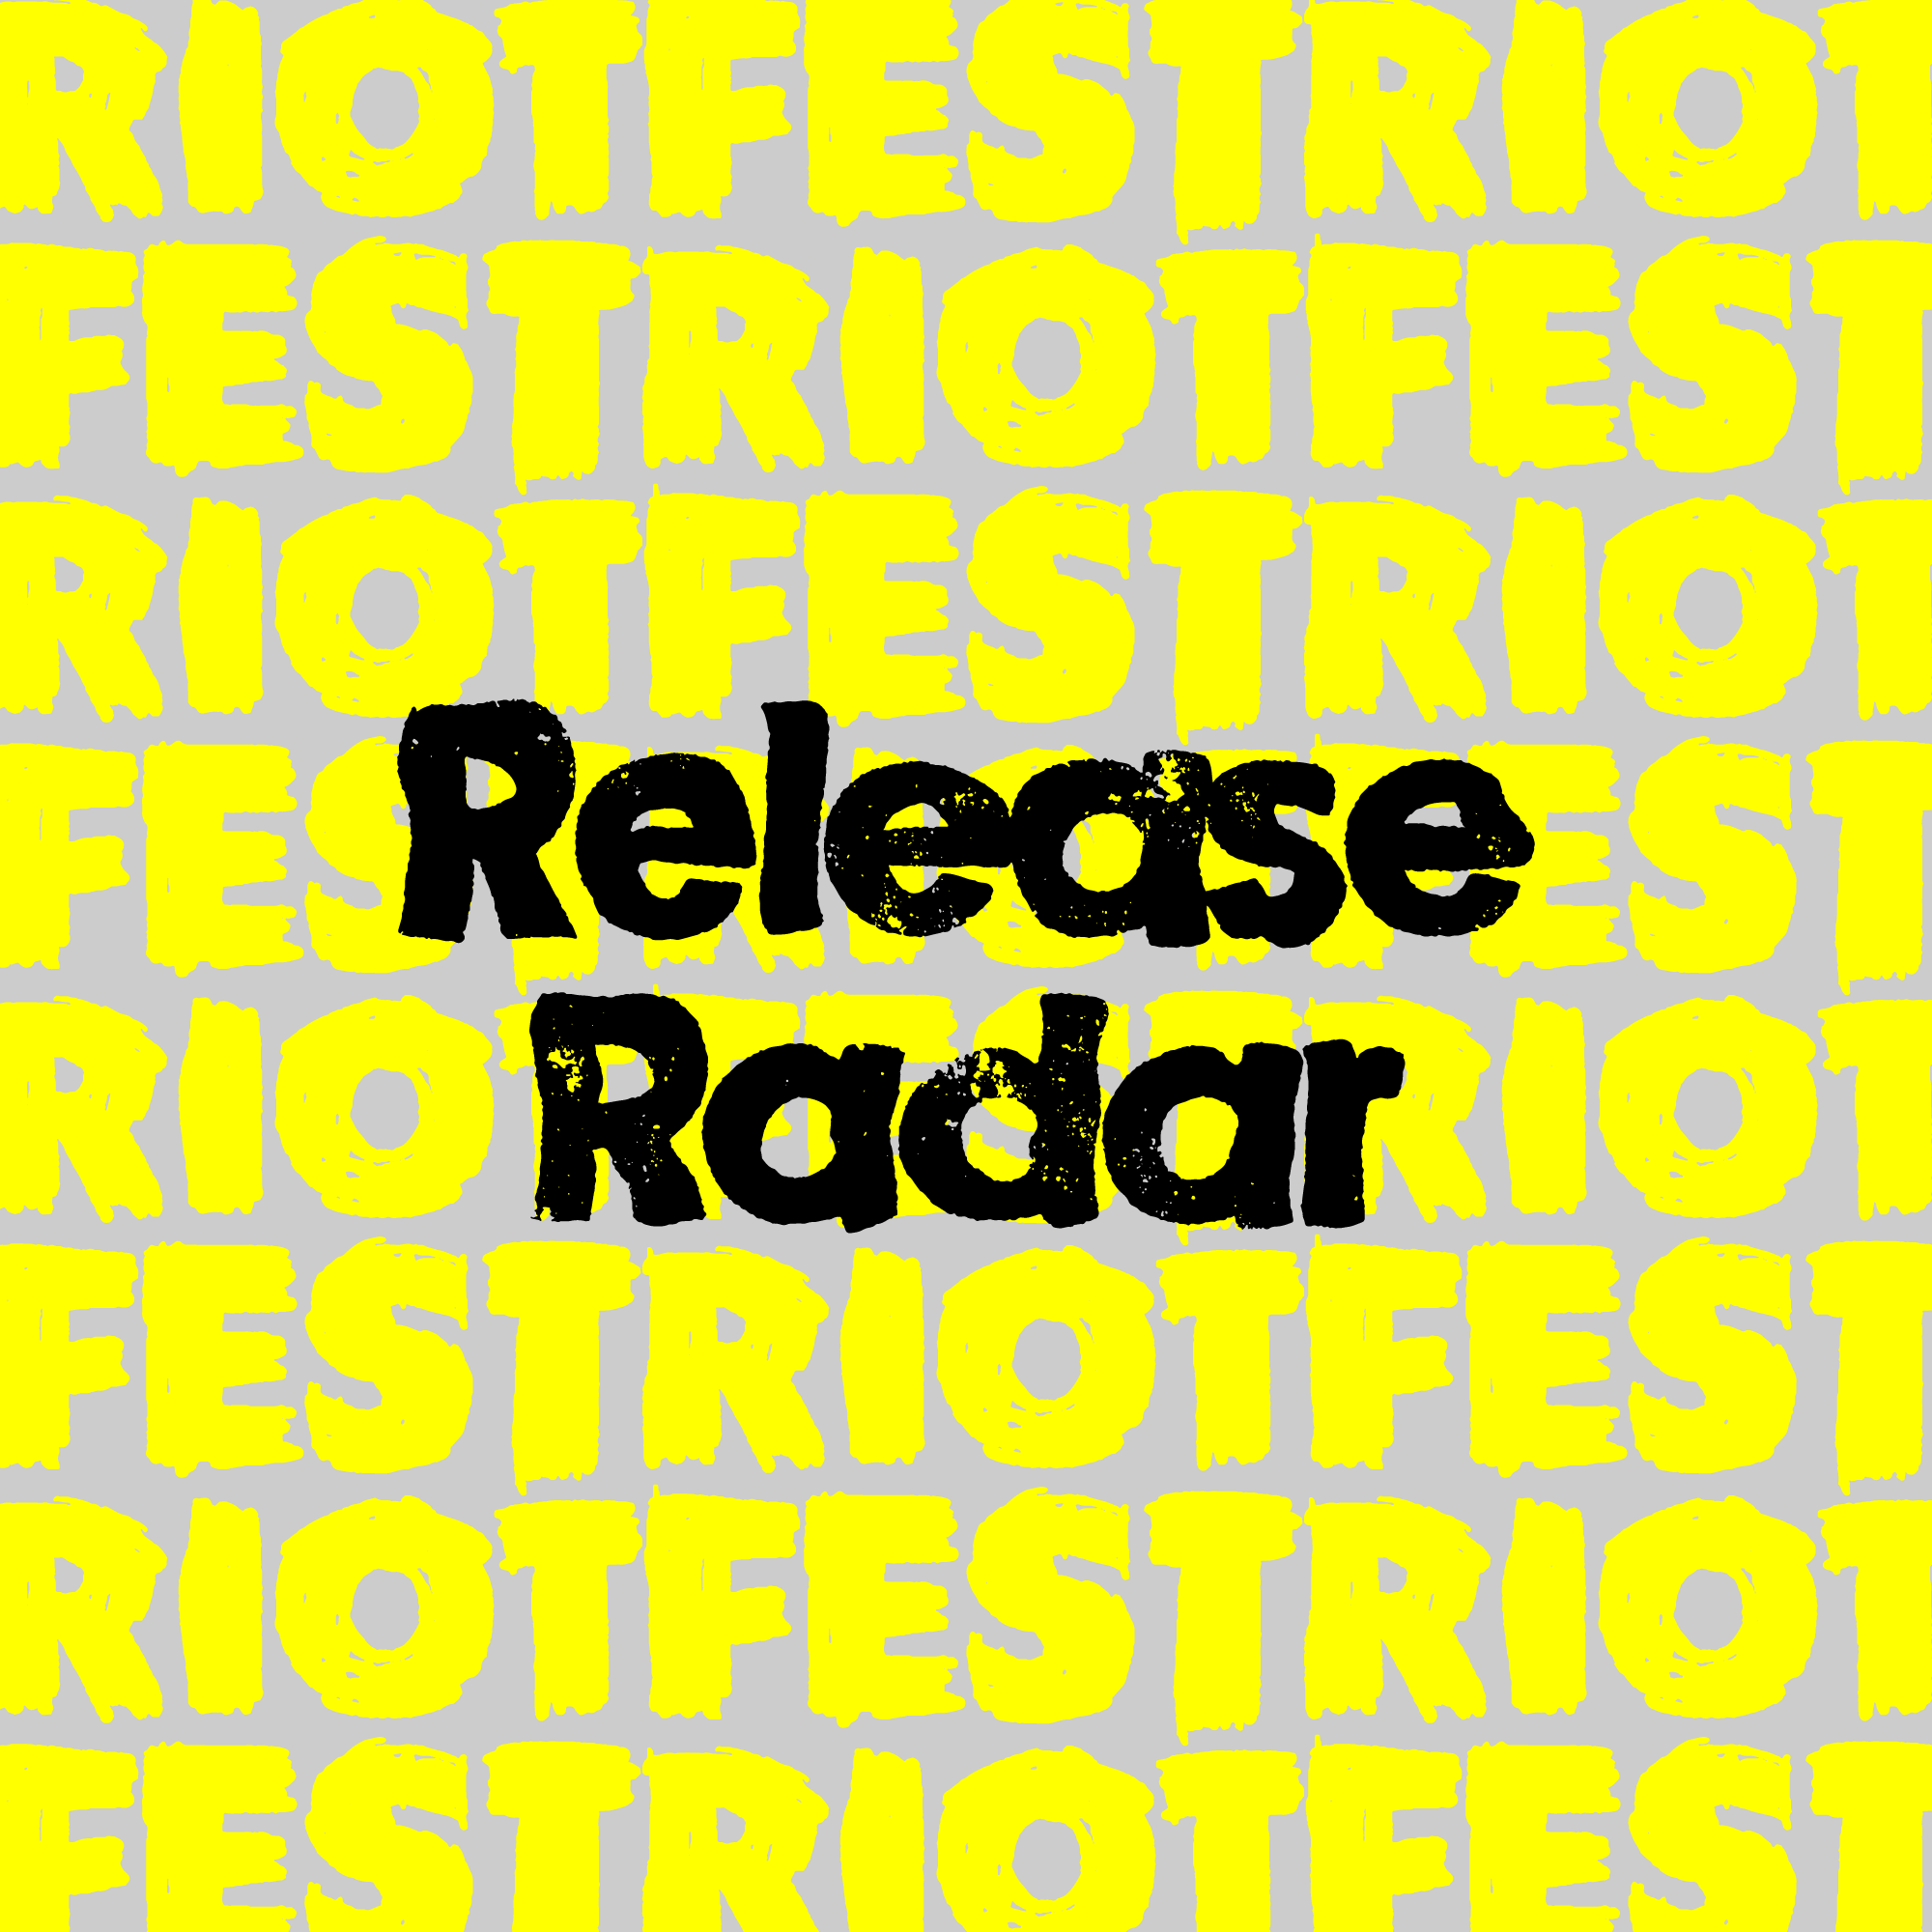 Riot Fest Release Radar Playlist